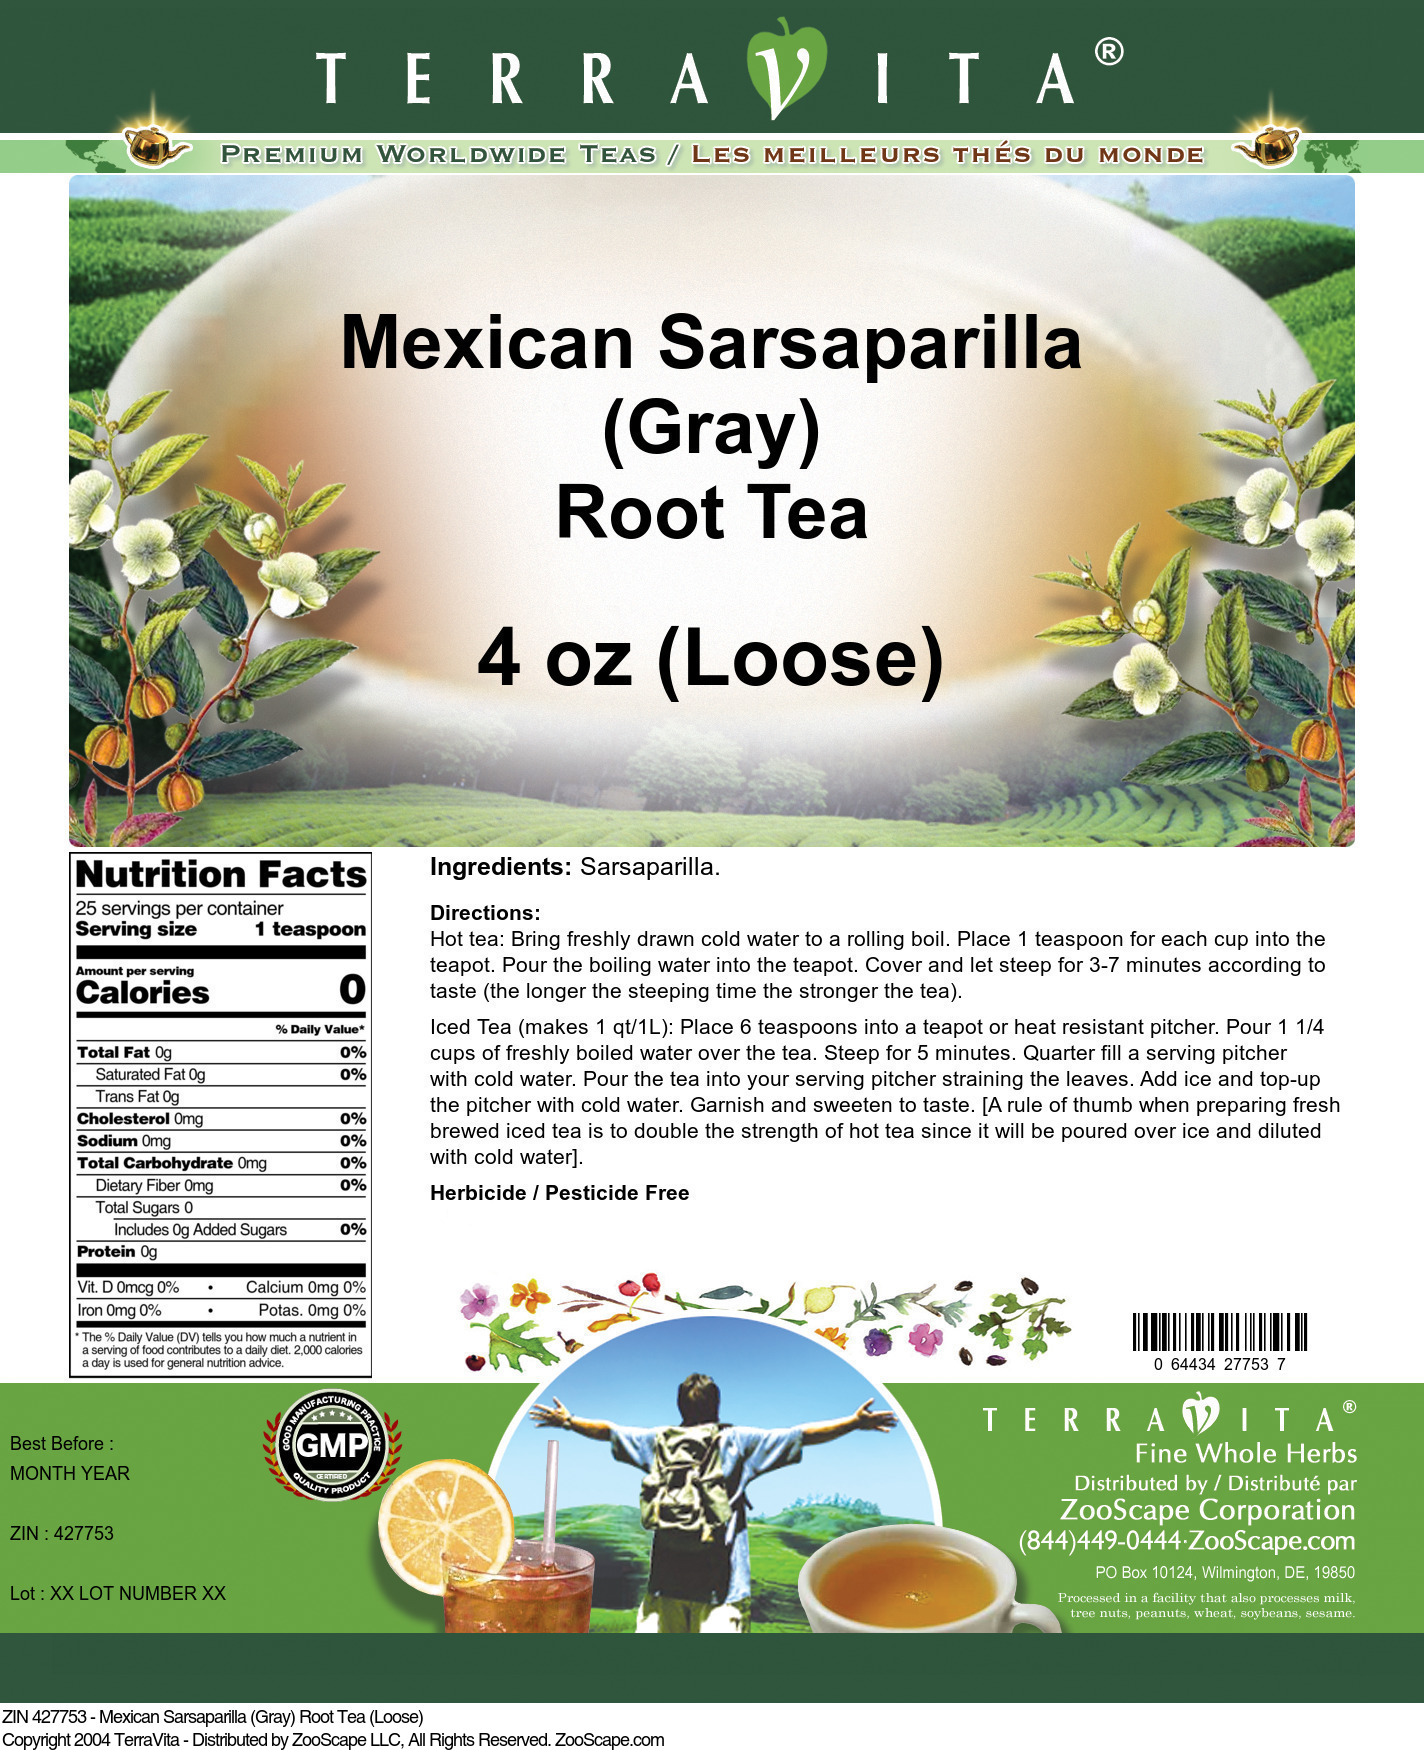 Mexican Sarsaparilla (Gray) Root Tea (Loose) - Label